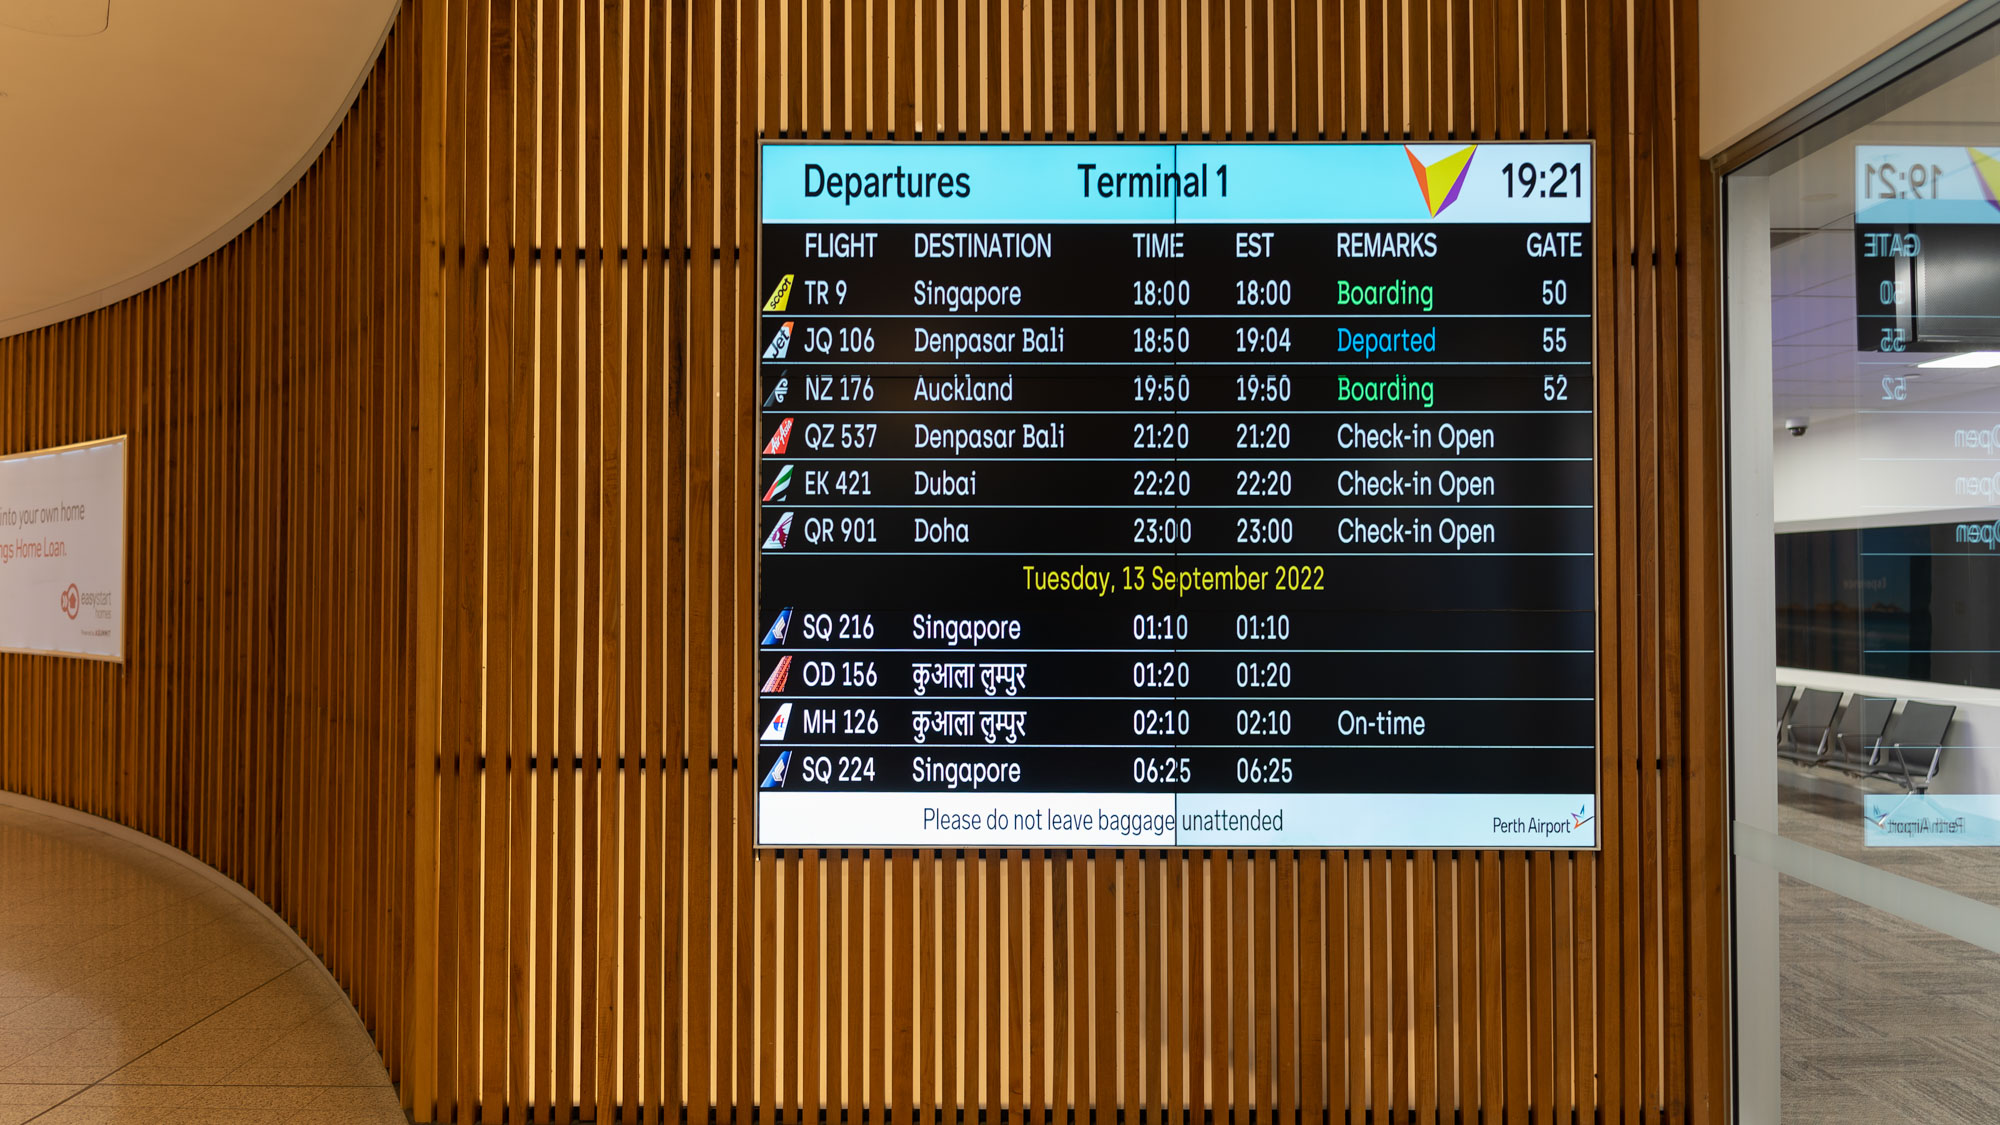 Perth Airport info screen